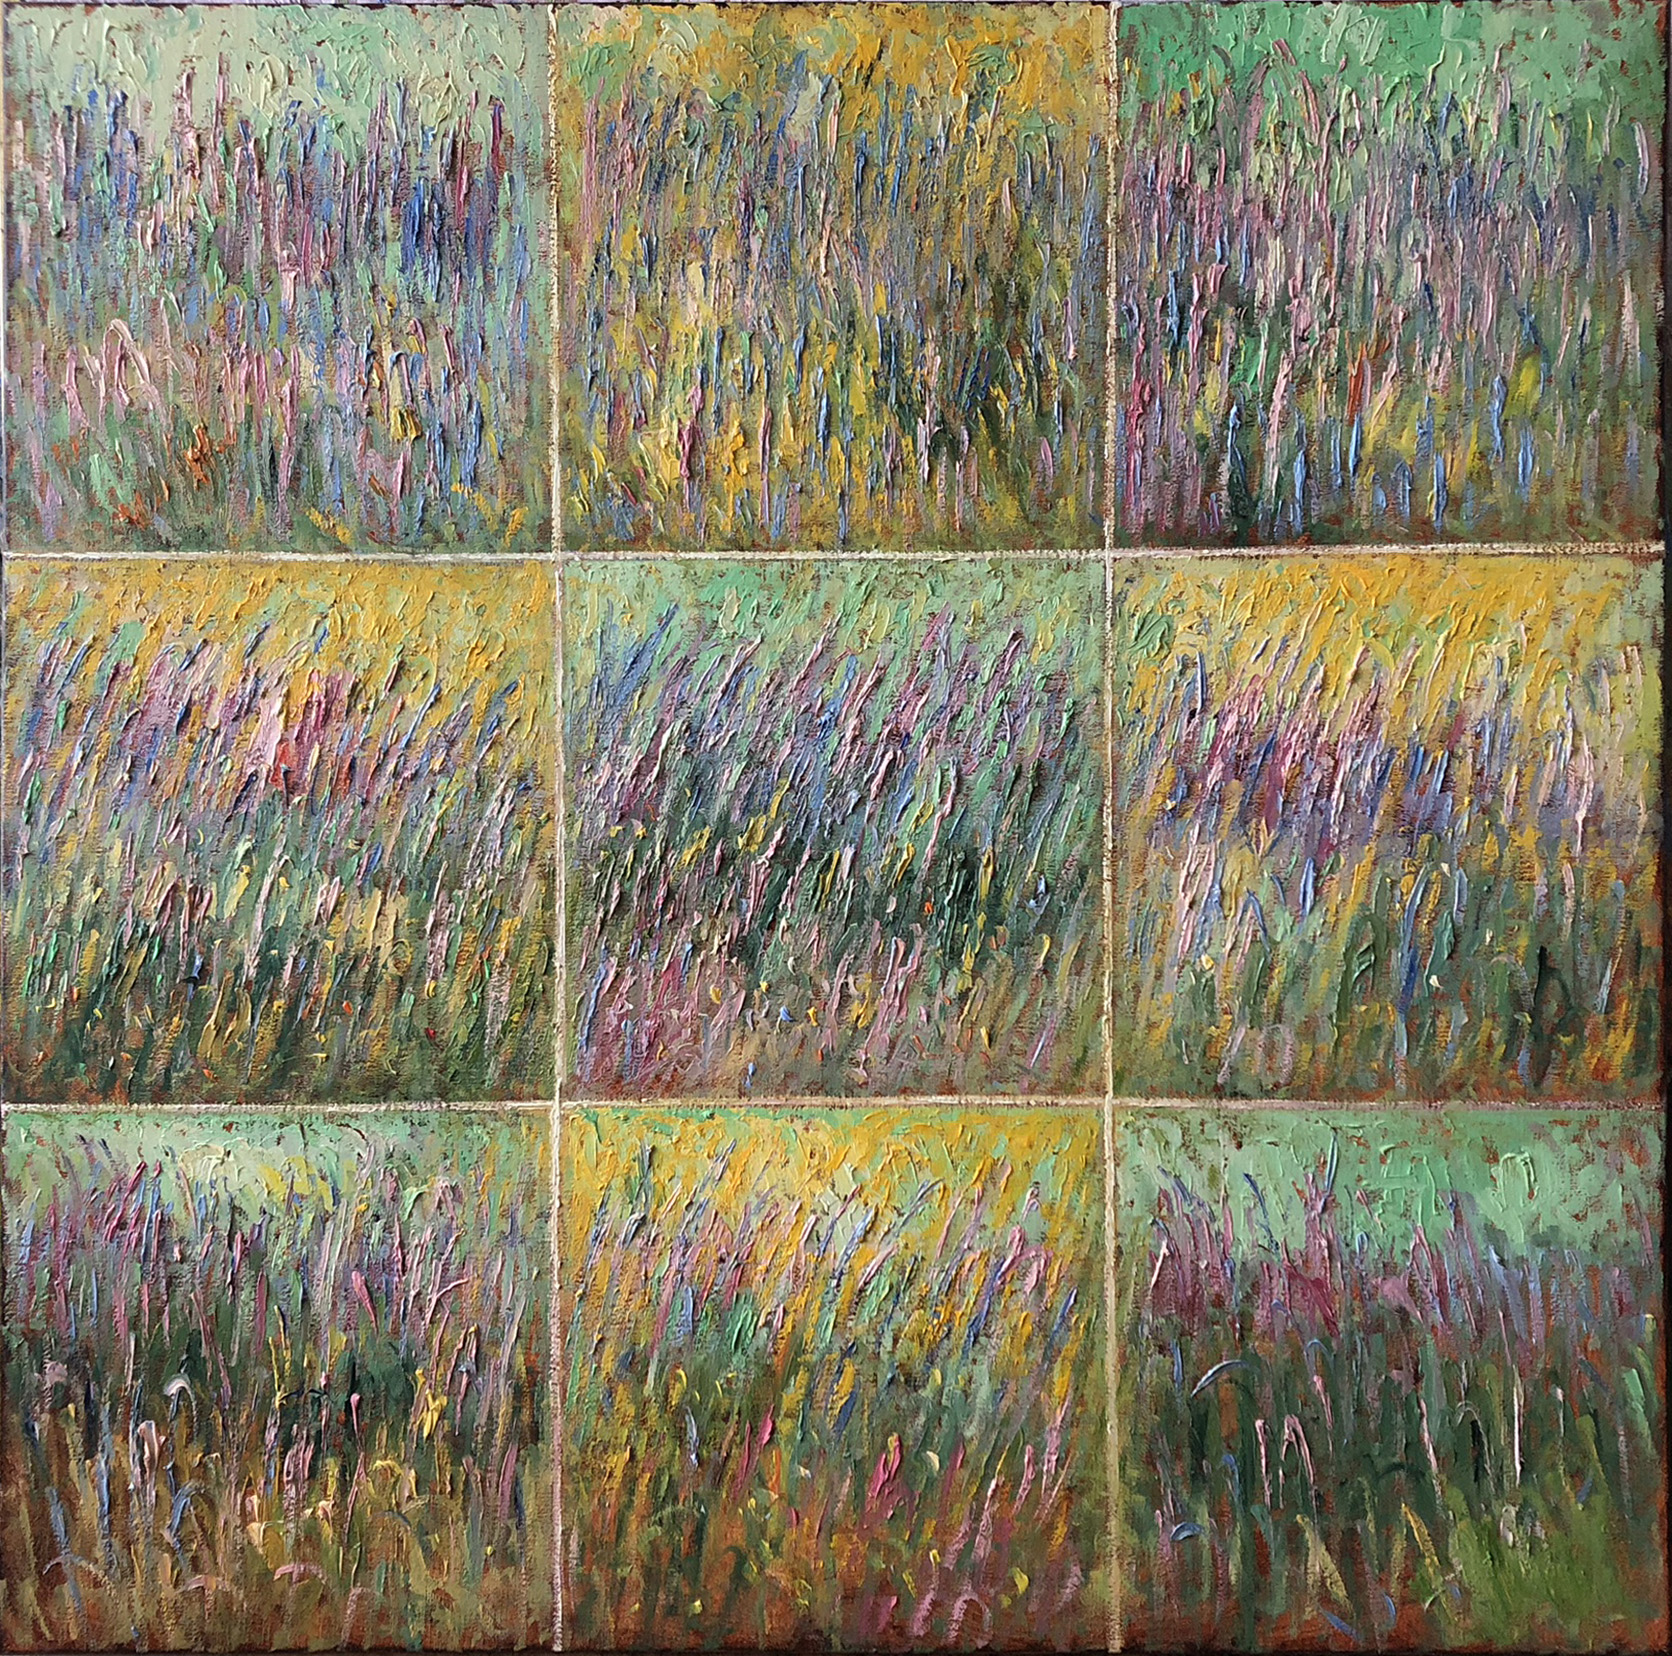 SAMIR SAMMOUN - Sun & Lavender Mosaic - Oil on Canvas - 48 x 48 inches